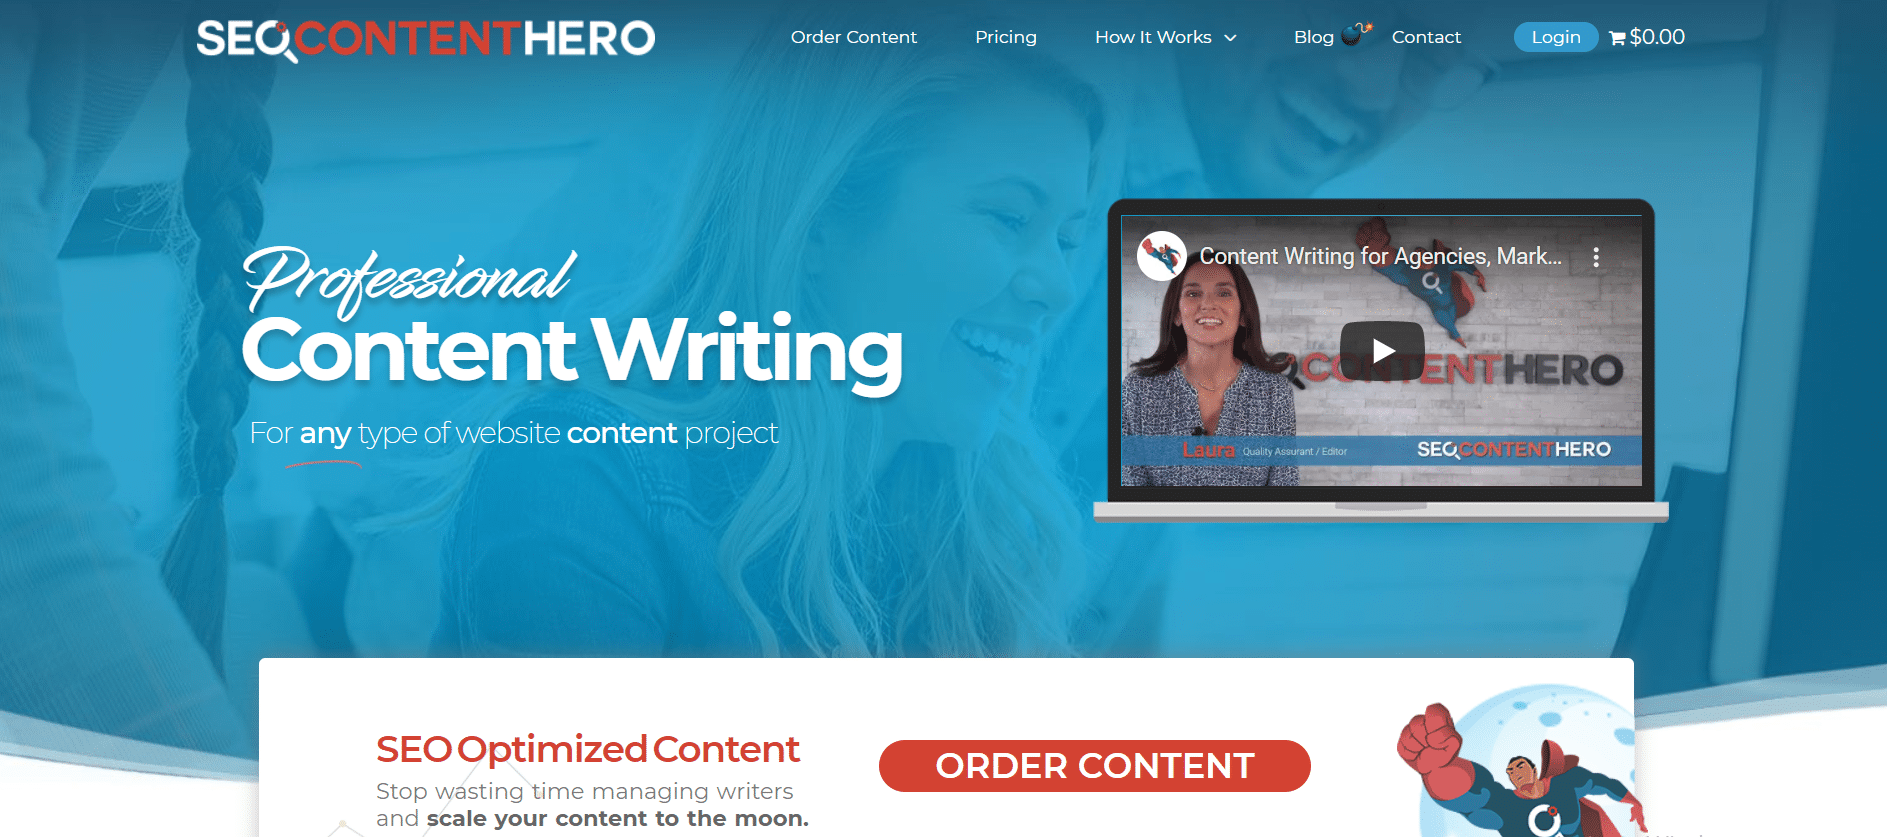 Screenshot of SEO Content Hero homepage.